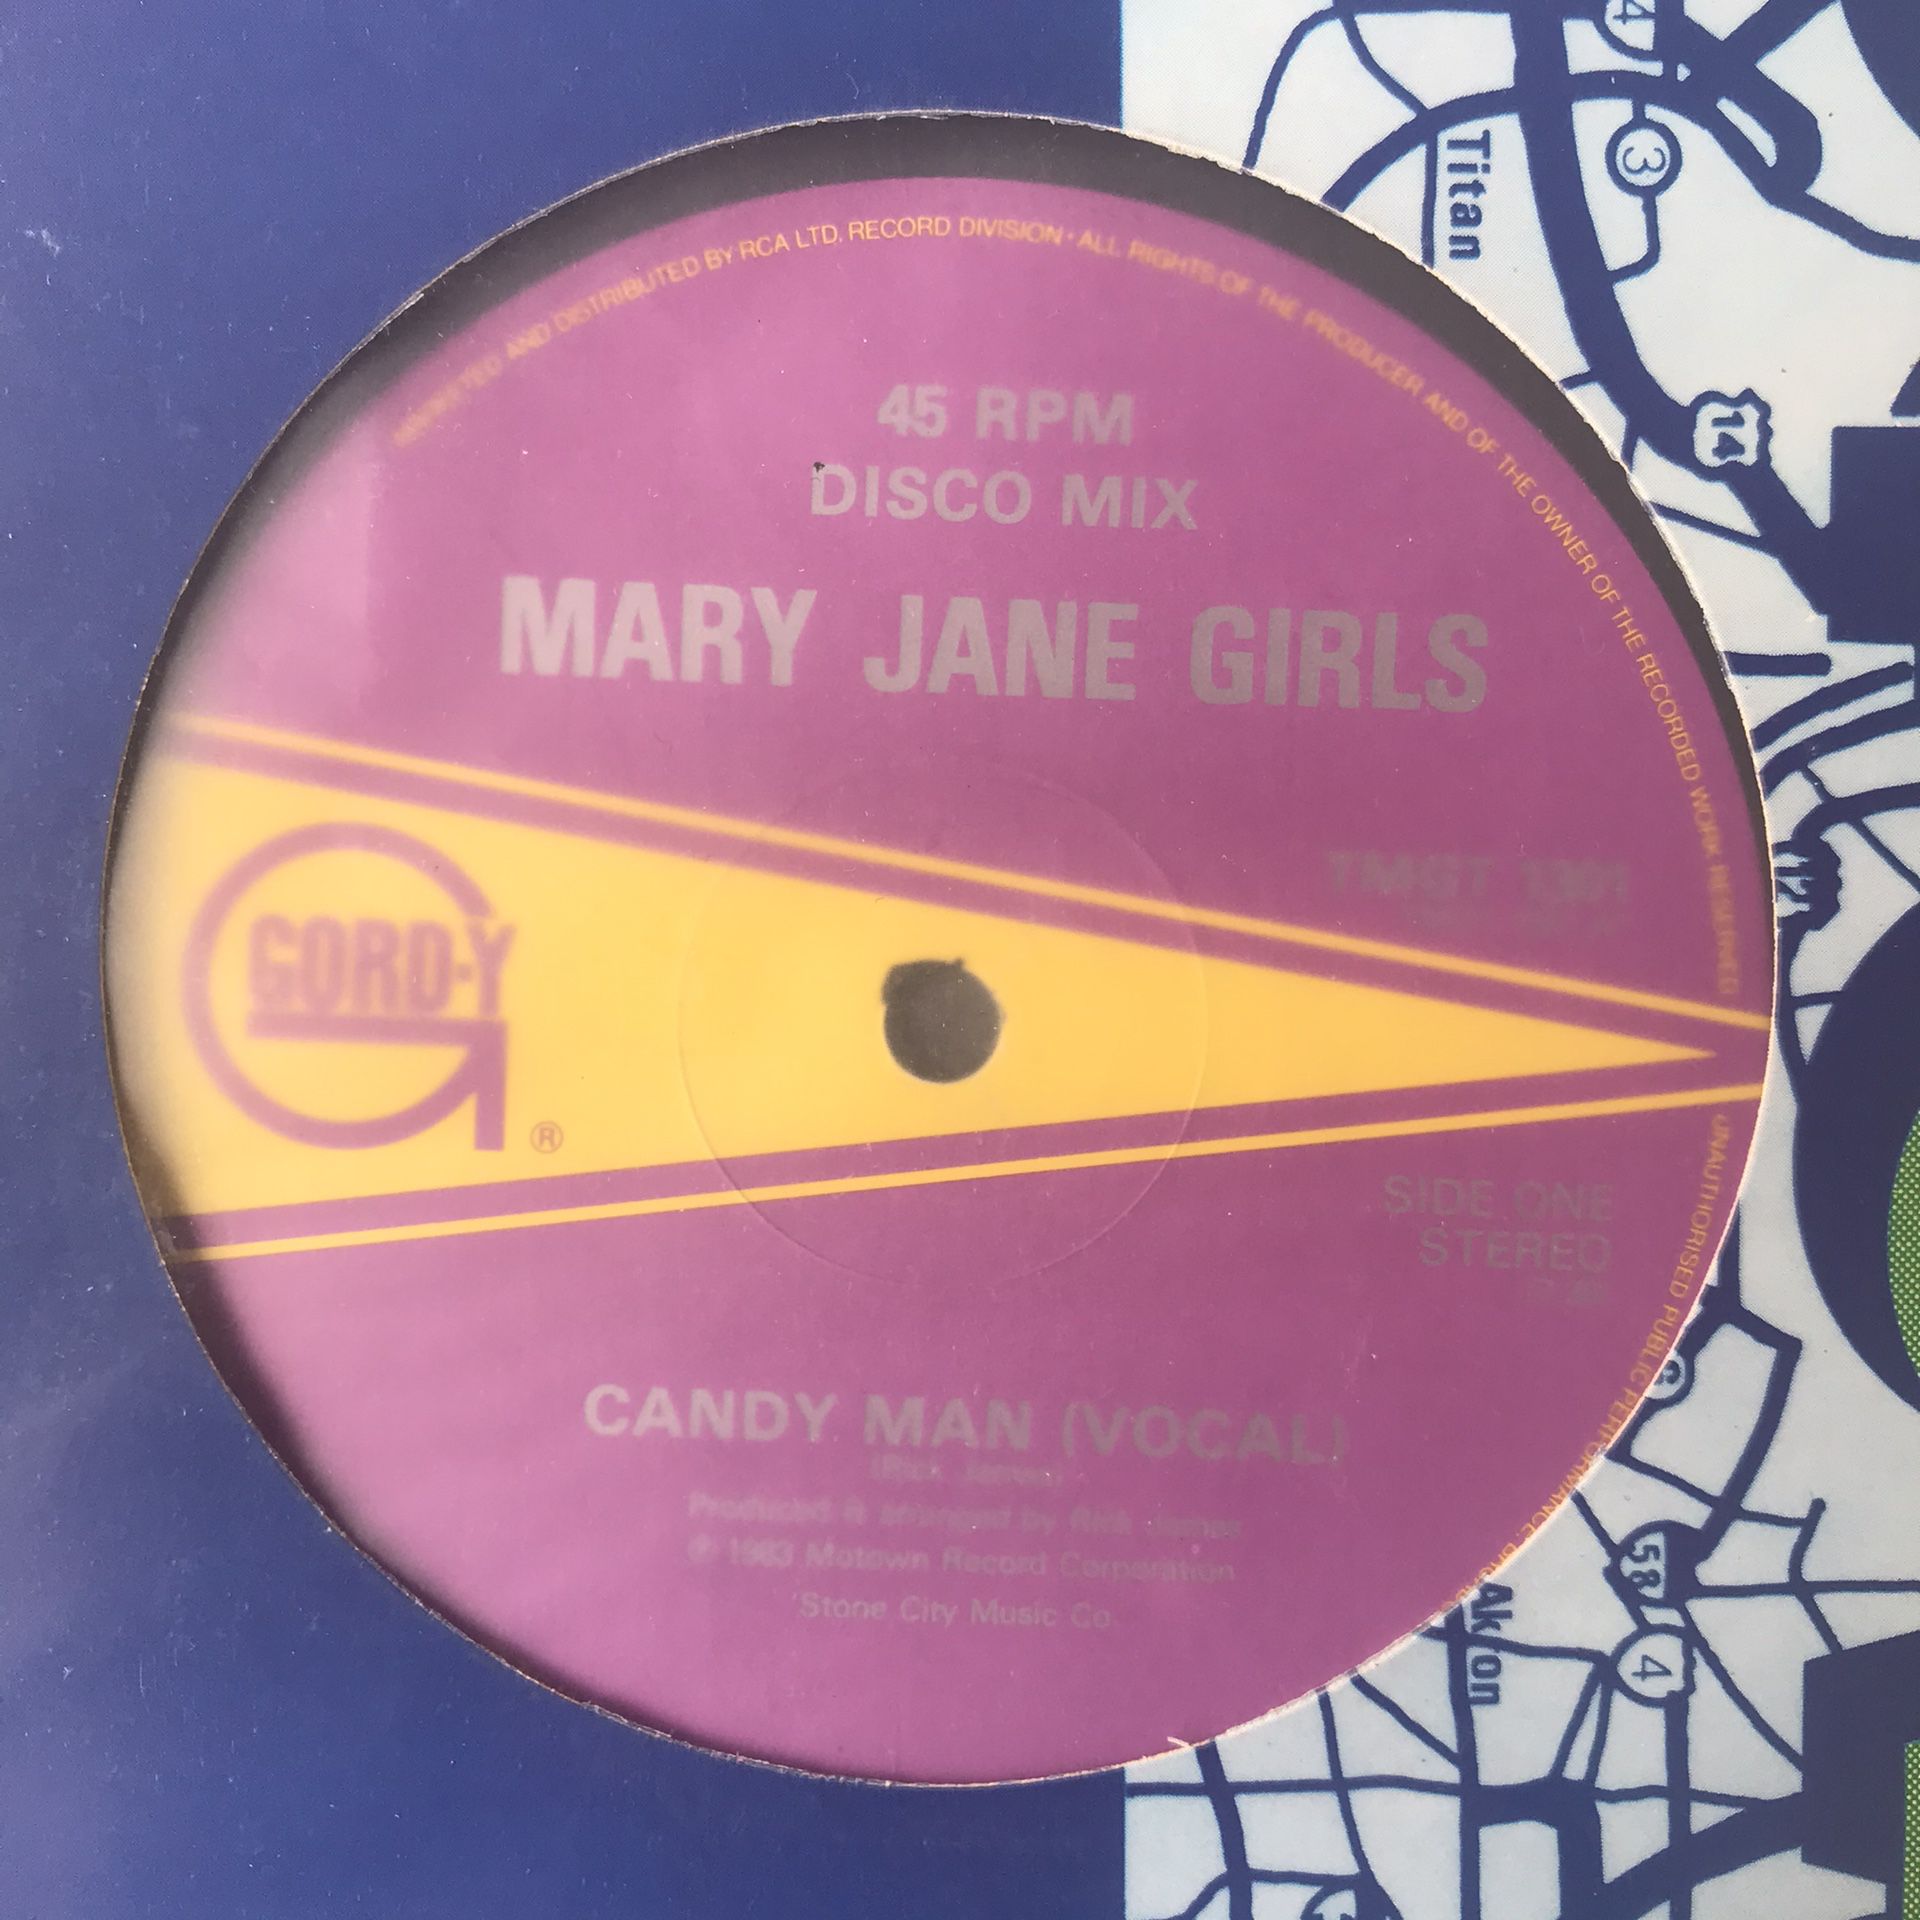 Old school 12 inch Vinyl Record Singles